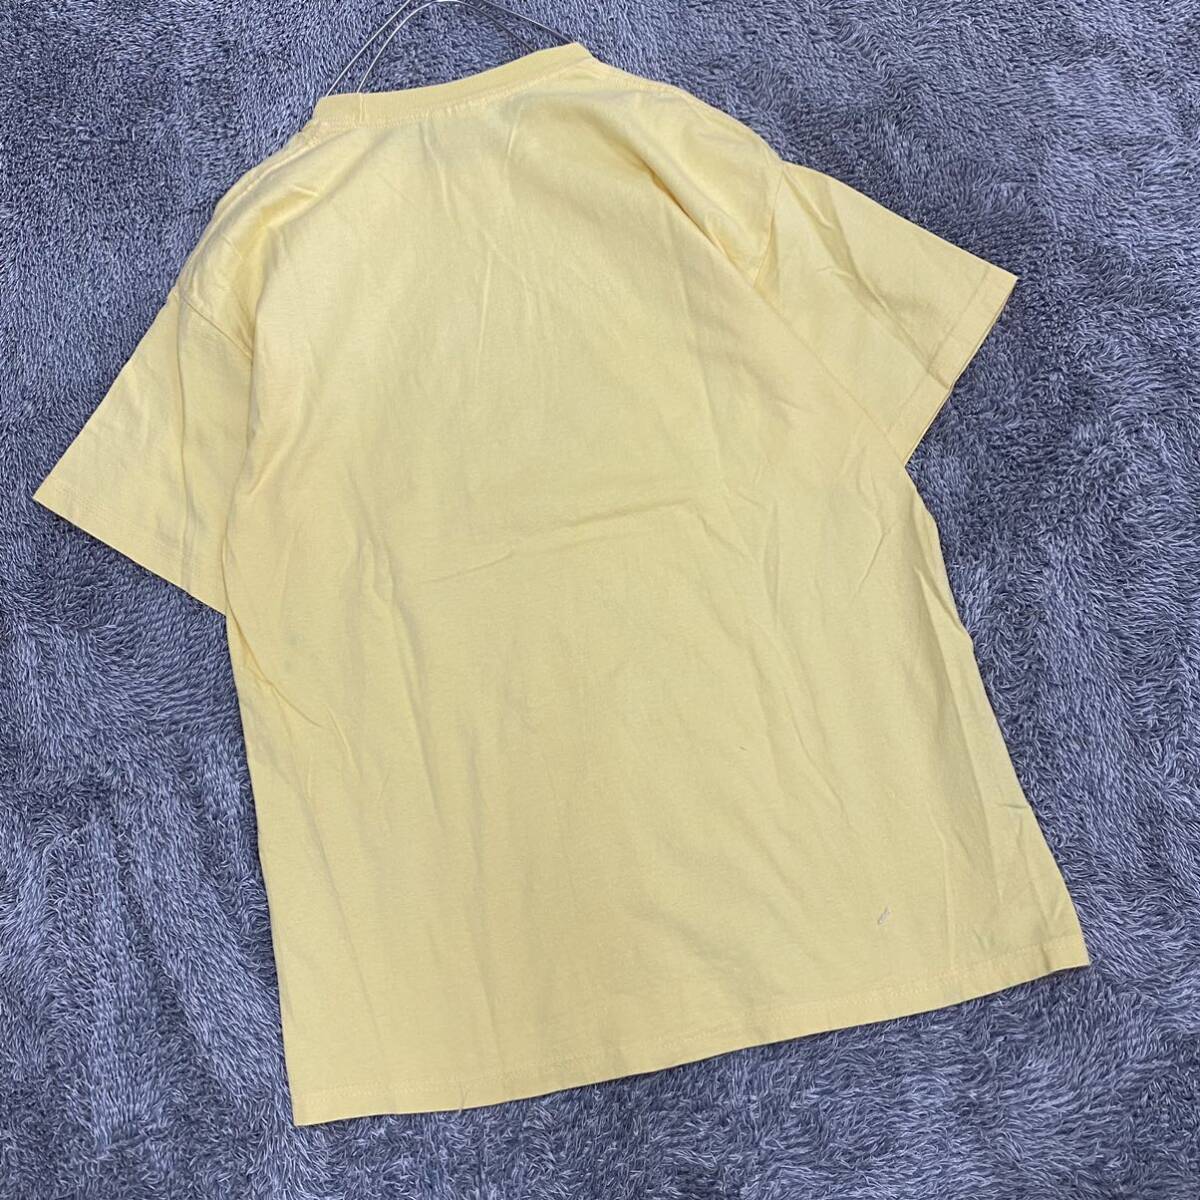 PORT&COMPANY ポートアンドカンパニー アニマル Tシャツ 半袖カットソー サイズL イエロー 黄色 メンズ トップス 最落なし （Z18）の画像2